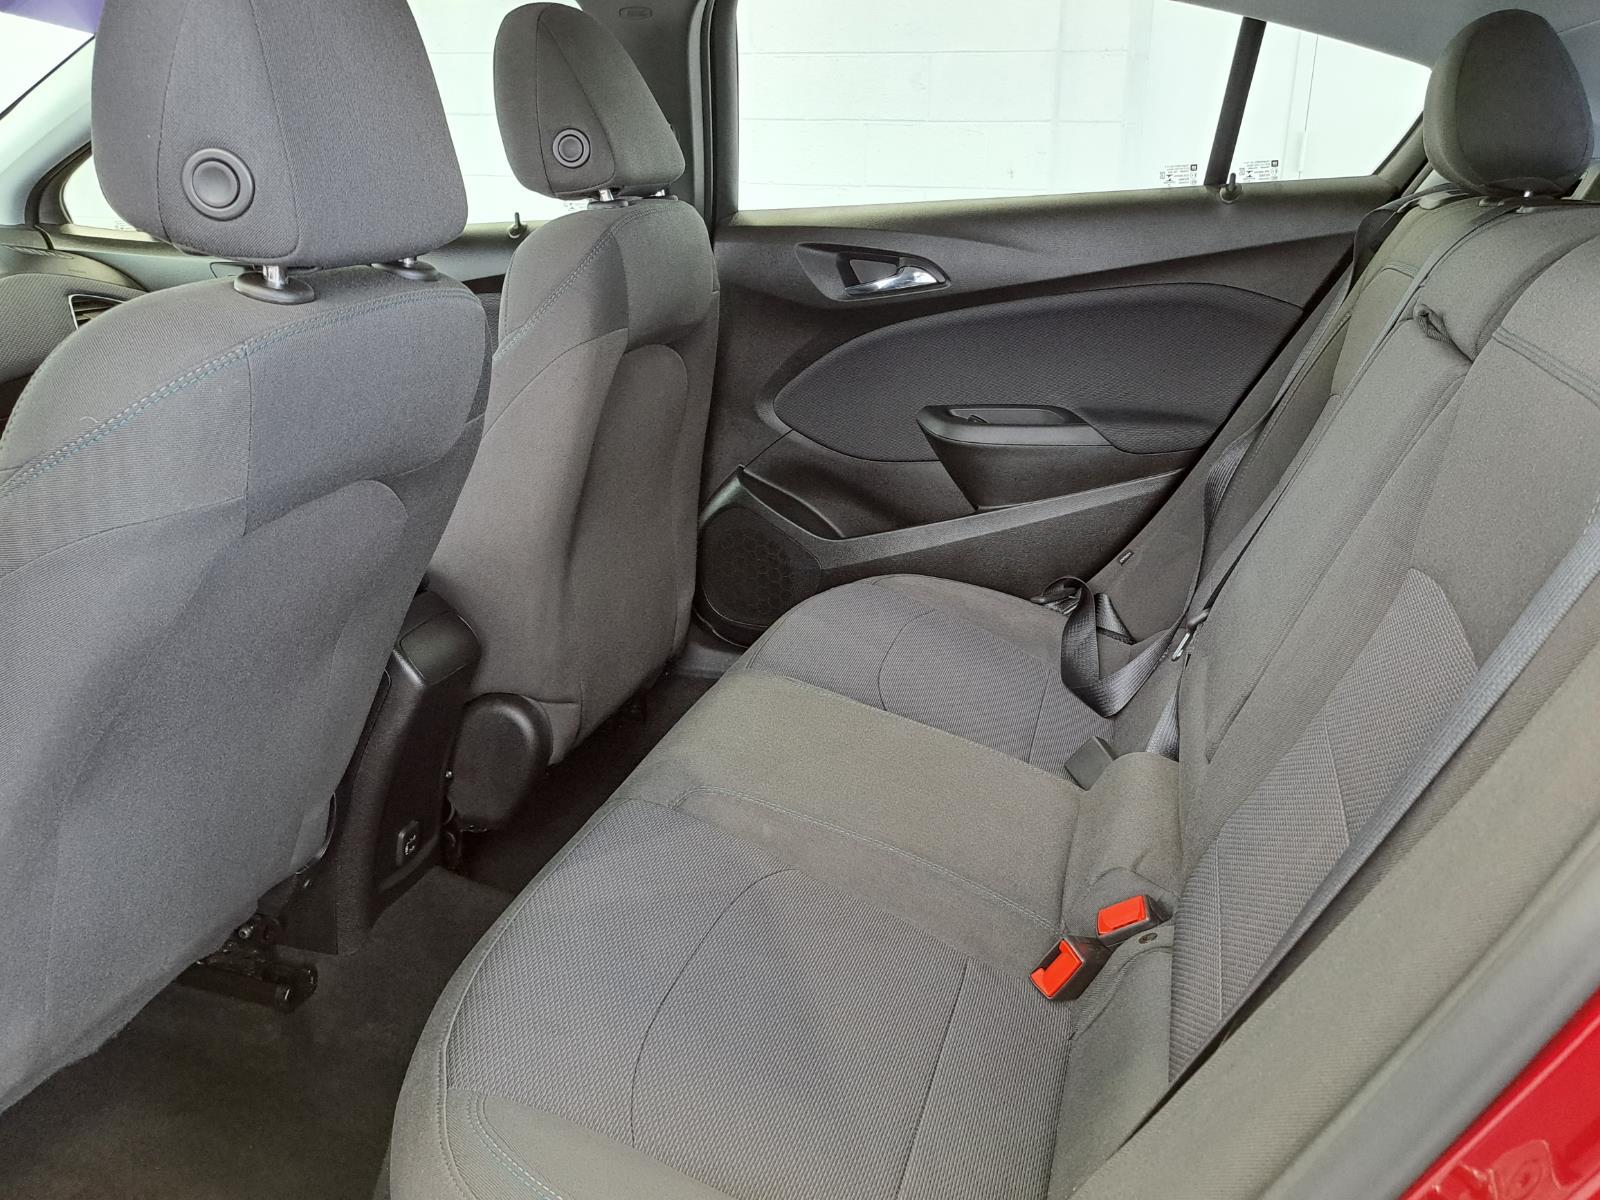 2019 Chevrolet Cruze LT Hatchback 4 Dr. Front Wheel Drive thumbnail 63